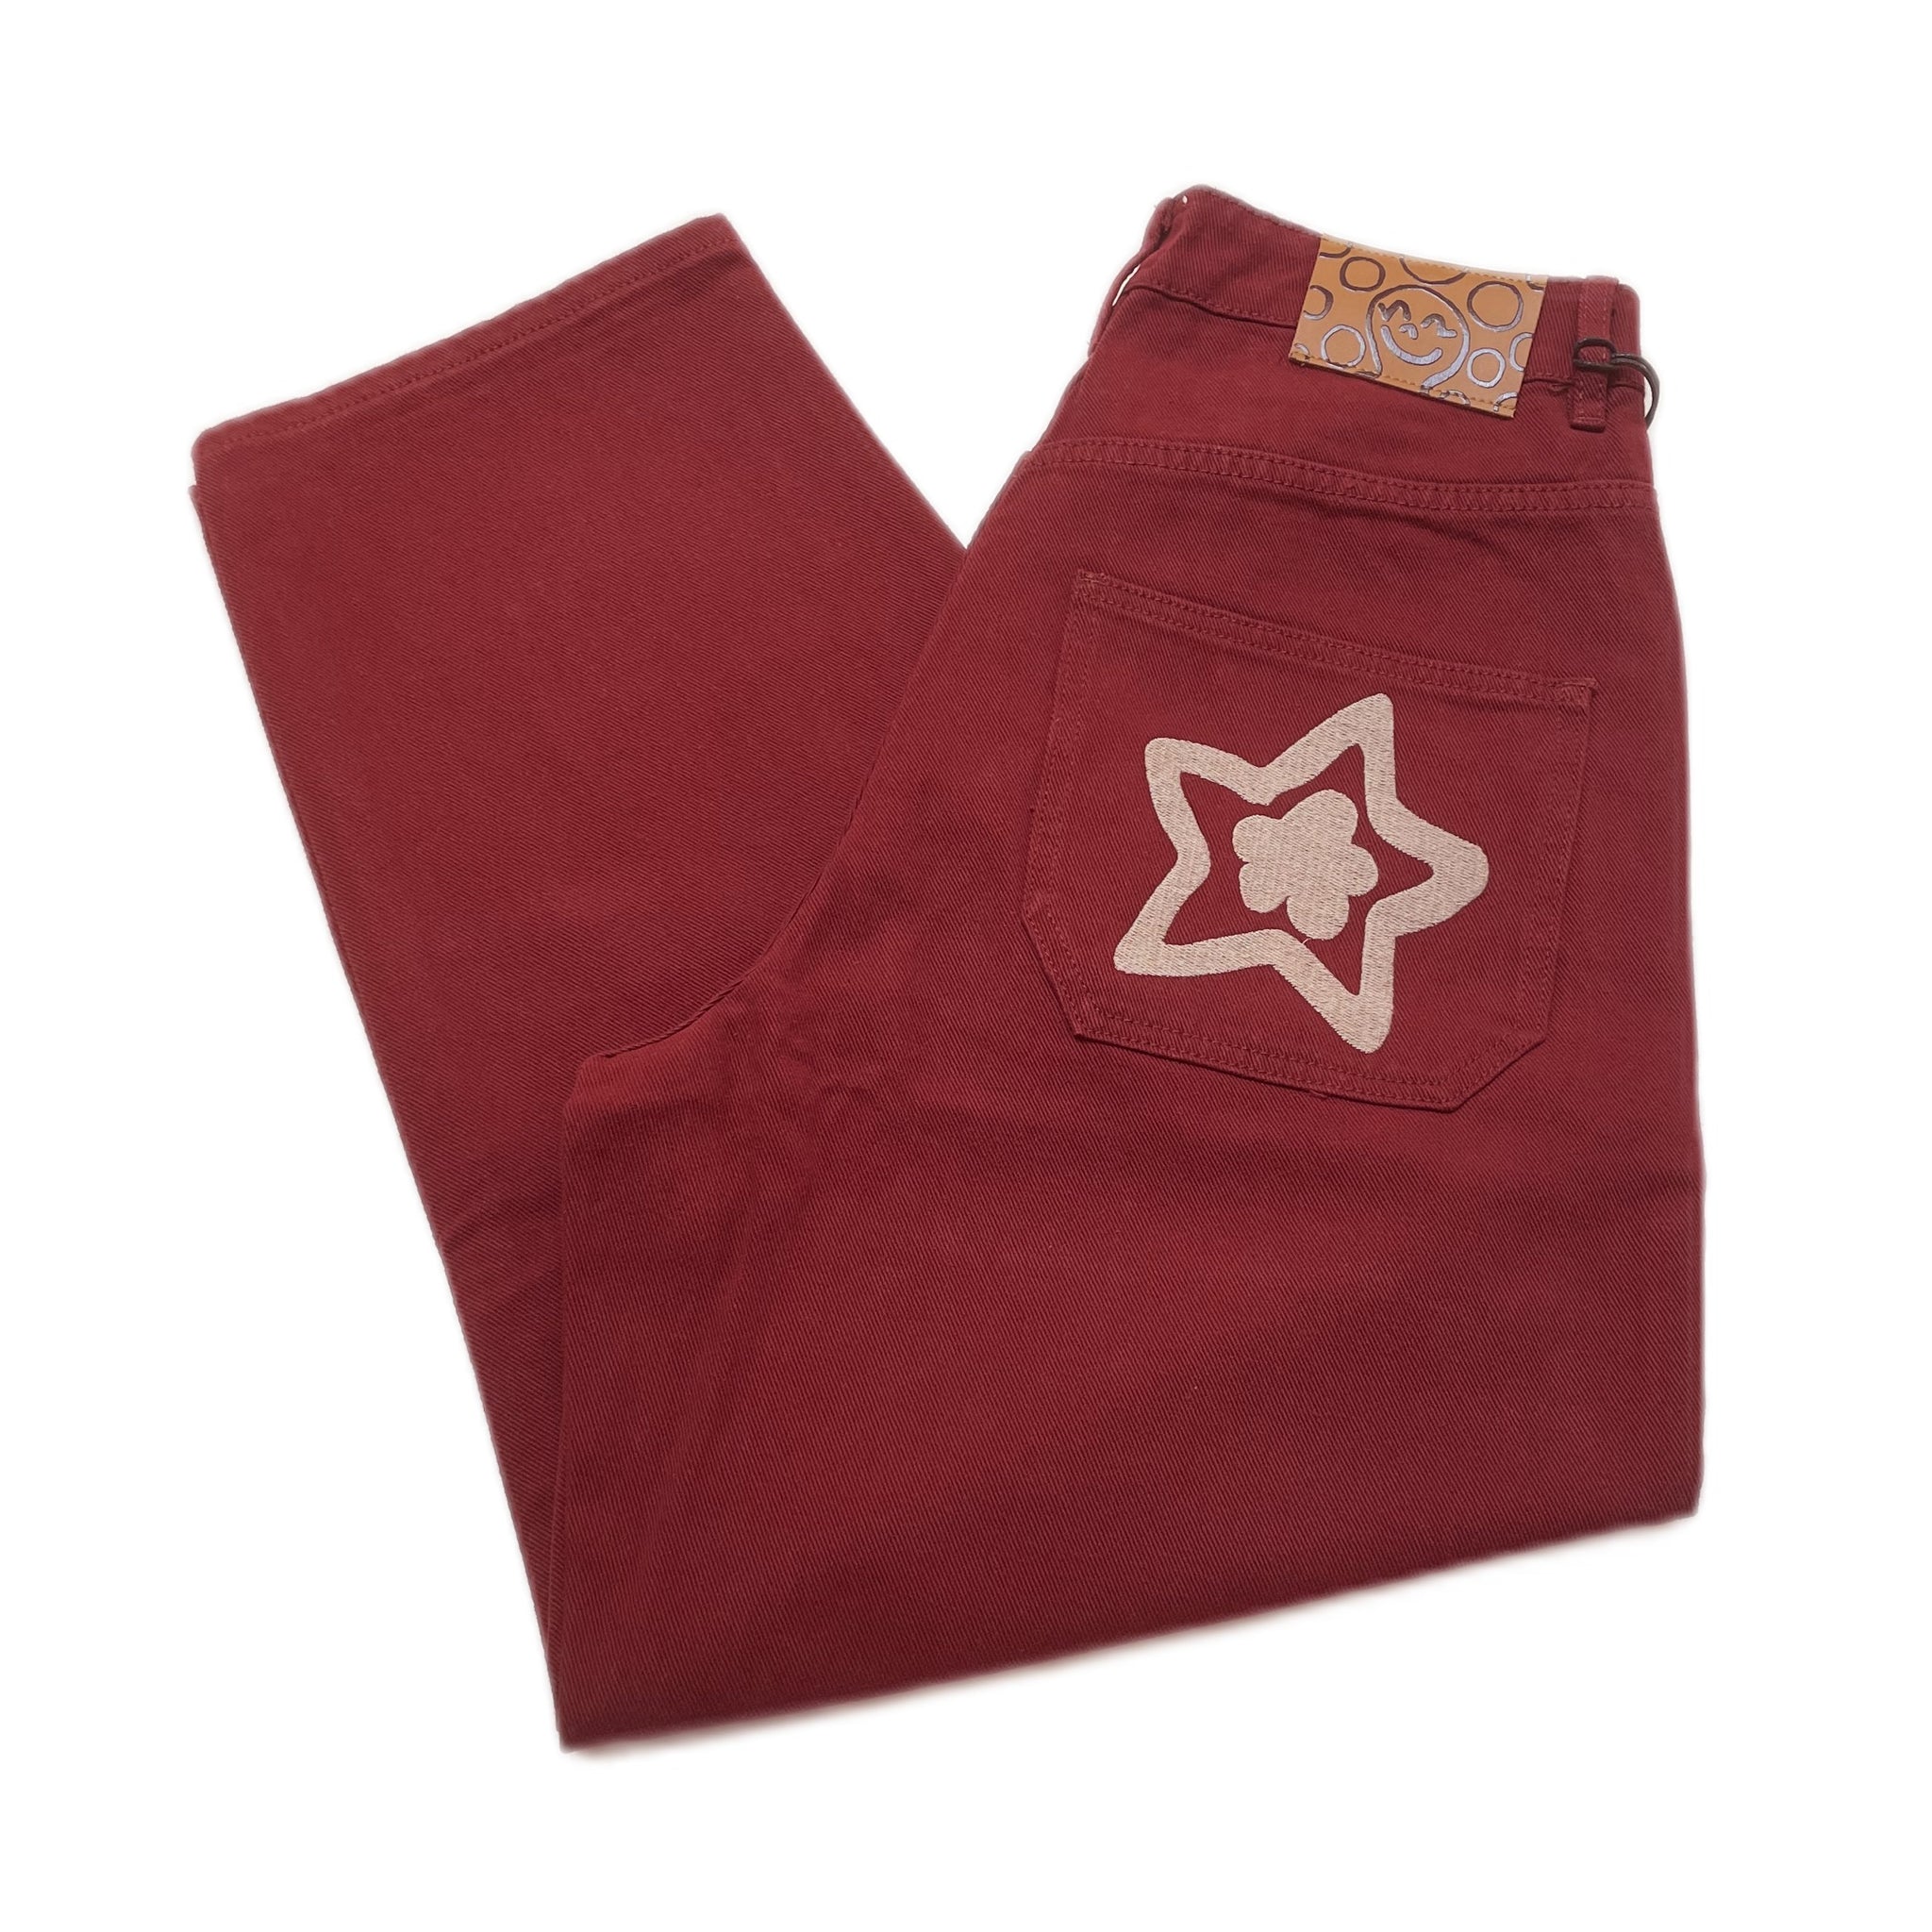 starteam pants star pants 34 - デニム/ジーンズ